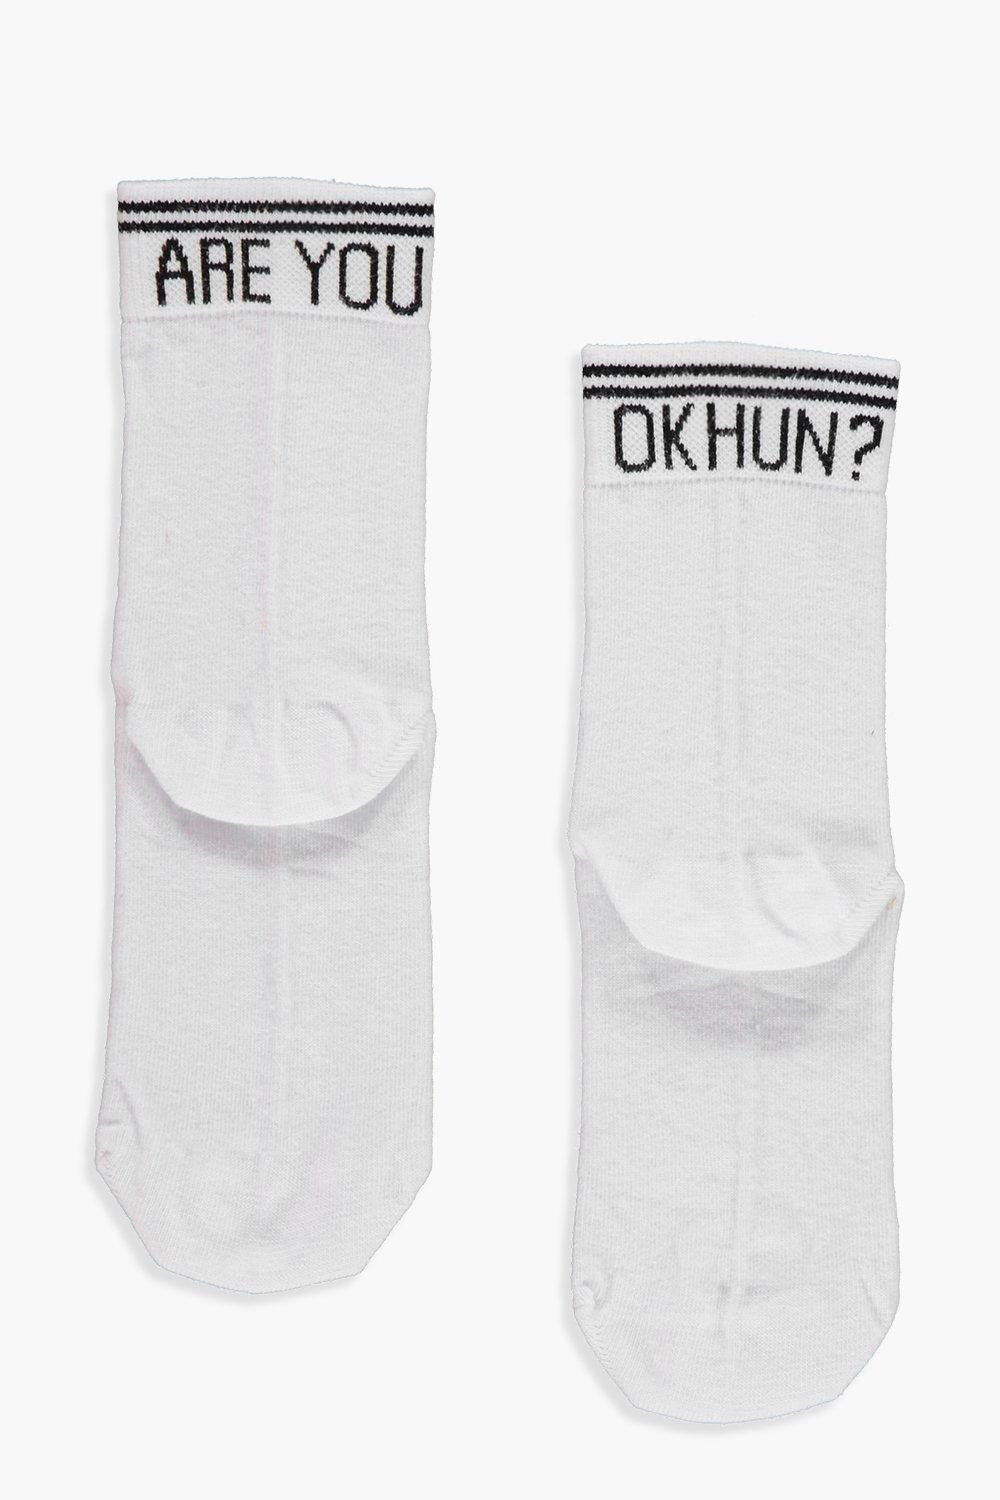 womens are you ok hun? slogan ankle socks - white - one size, white